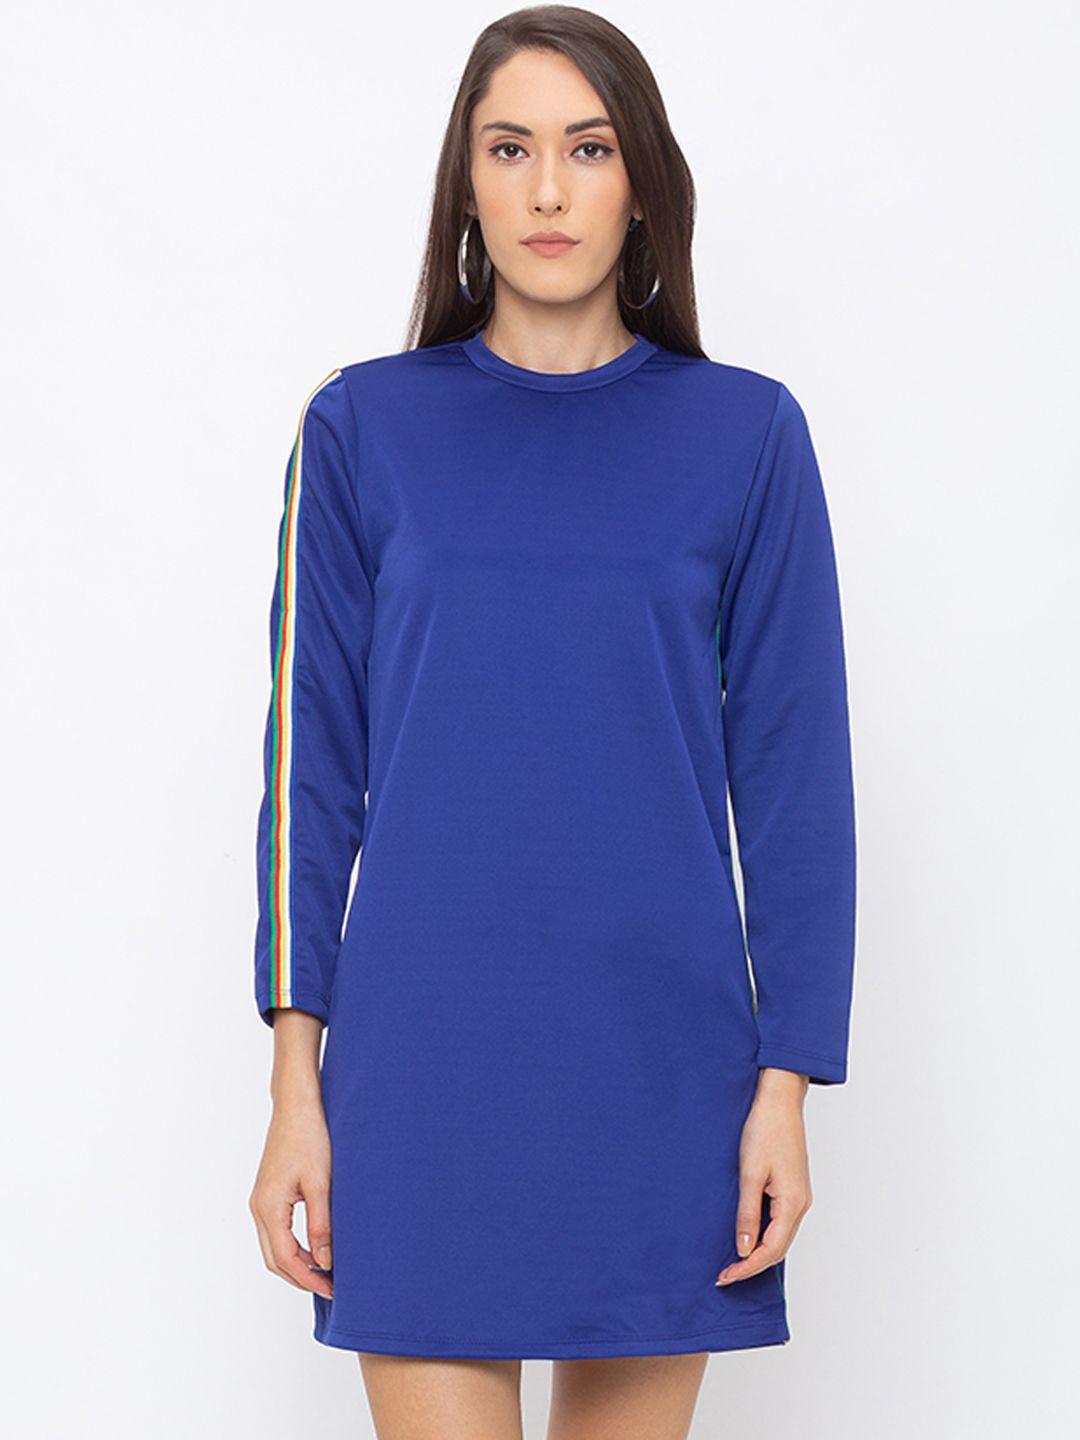 globus-women-blue-solid-t-shirt-dress